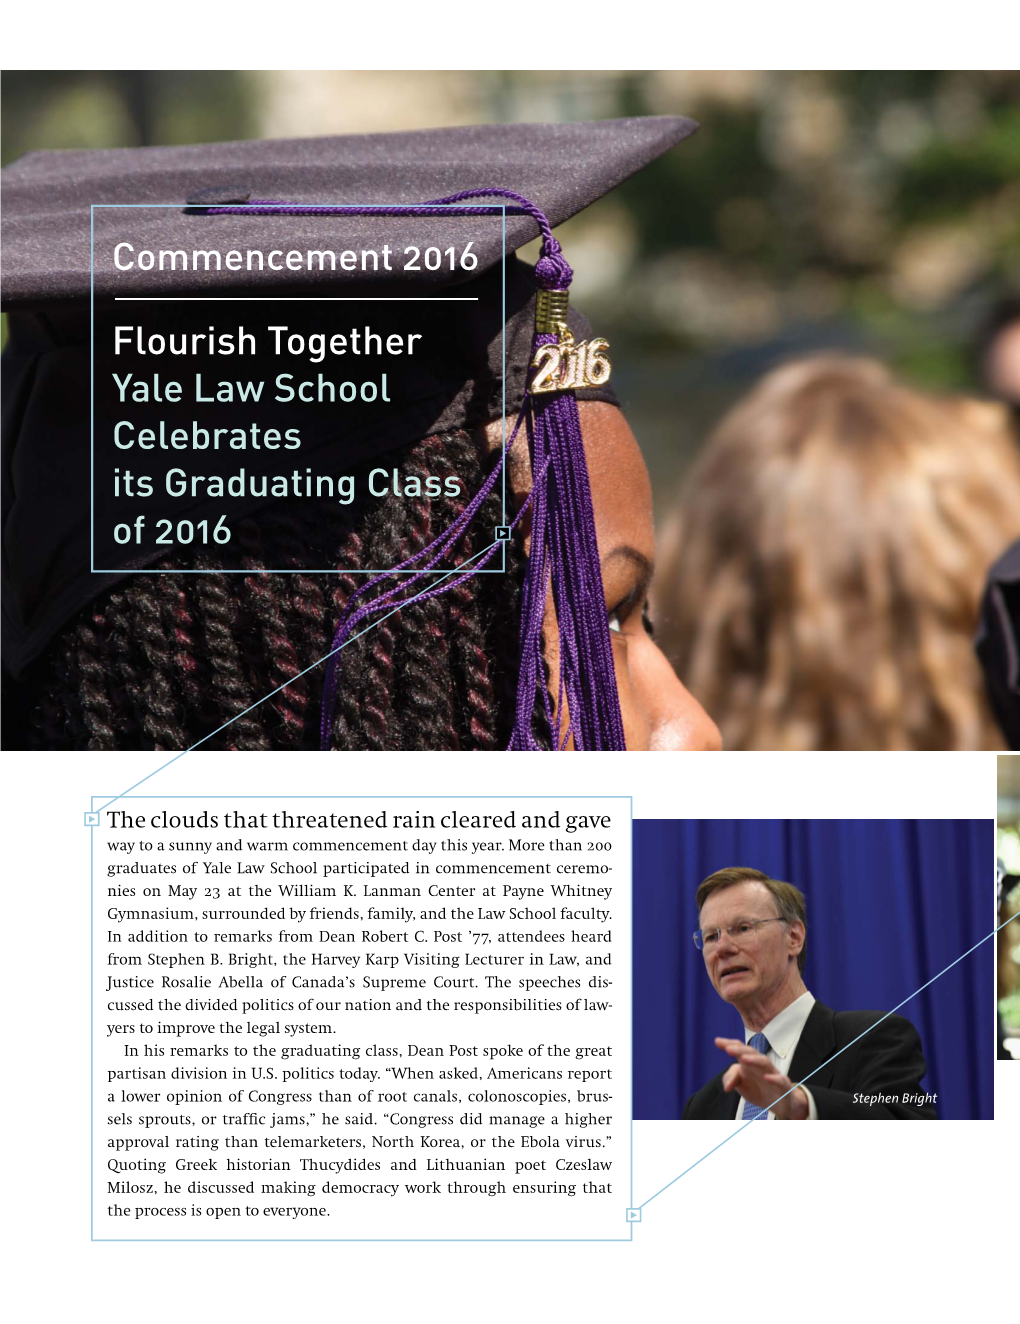 Flourish Together Yale Law School Celebrates Its Graduating Class of 2016